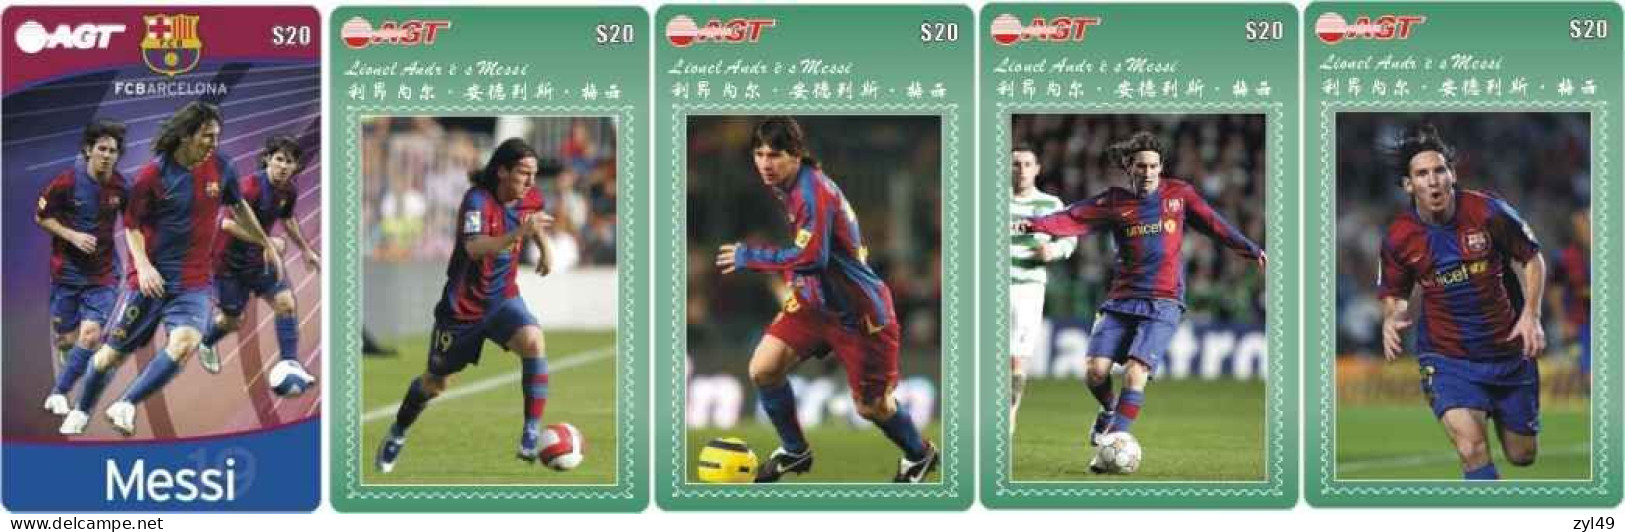 F13016 China phone cards football 351pcs